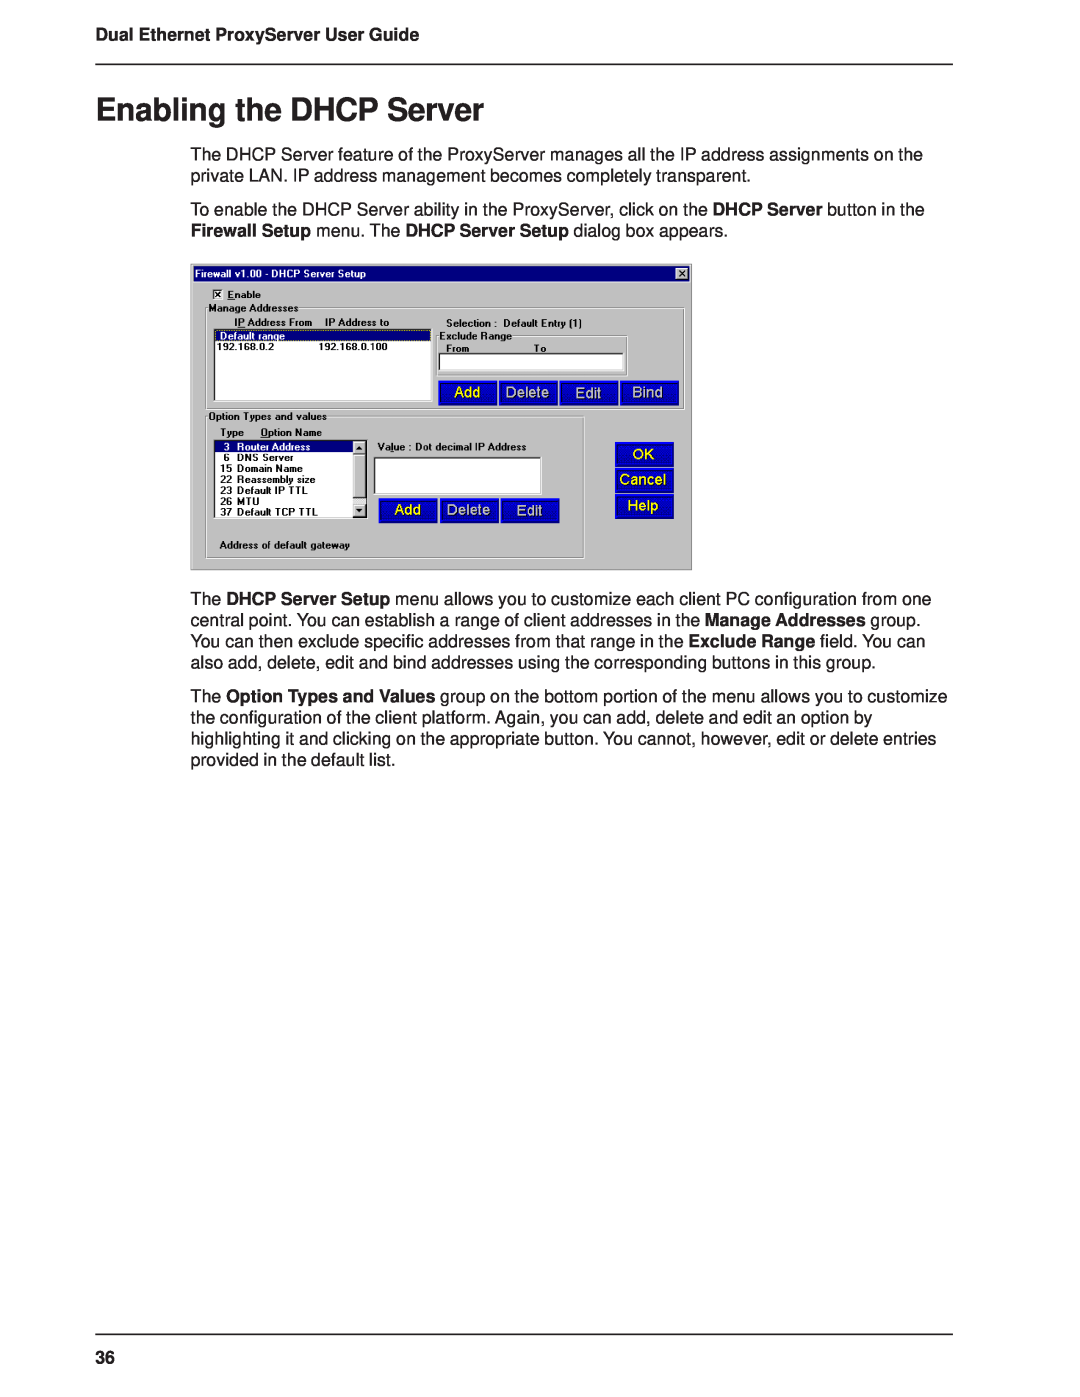 Multitech MTPSR1-120 manual Enabling the DHCP Server, Dual Ethernet ProxyServer User Guide 